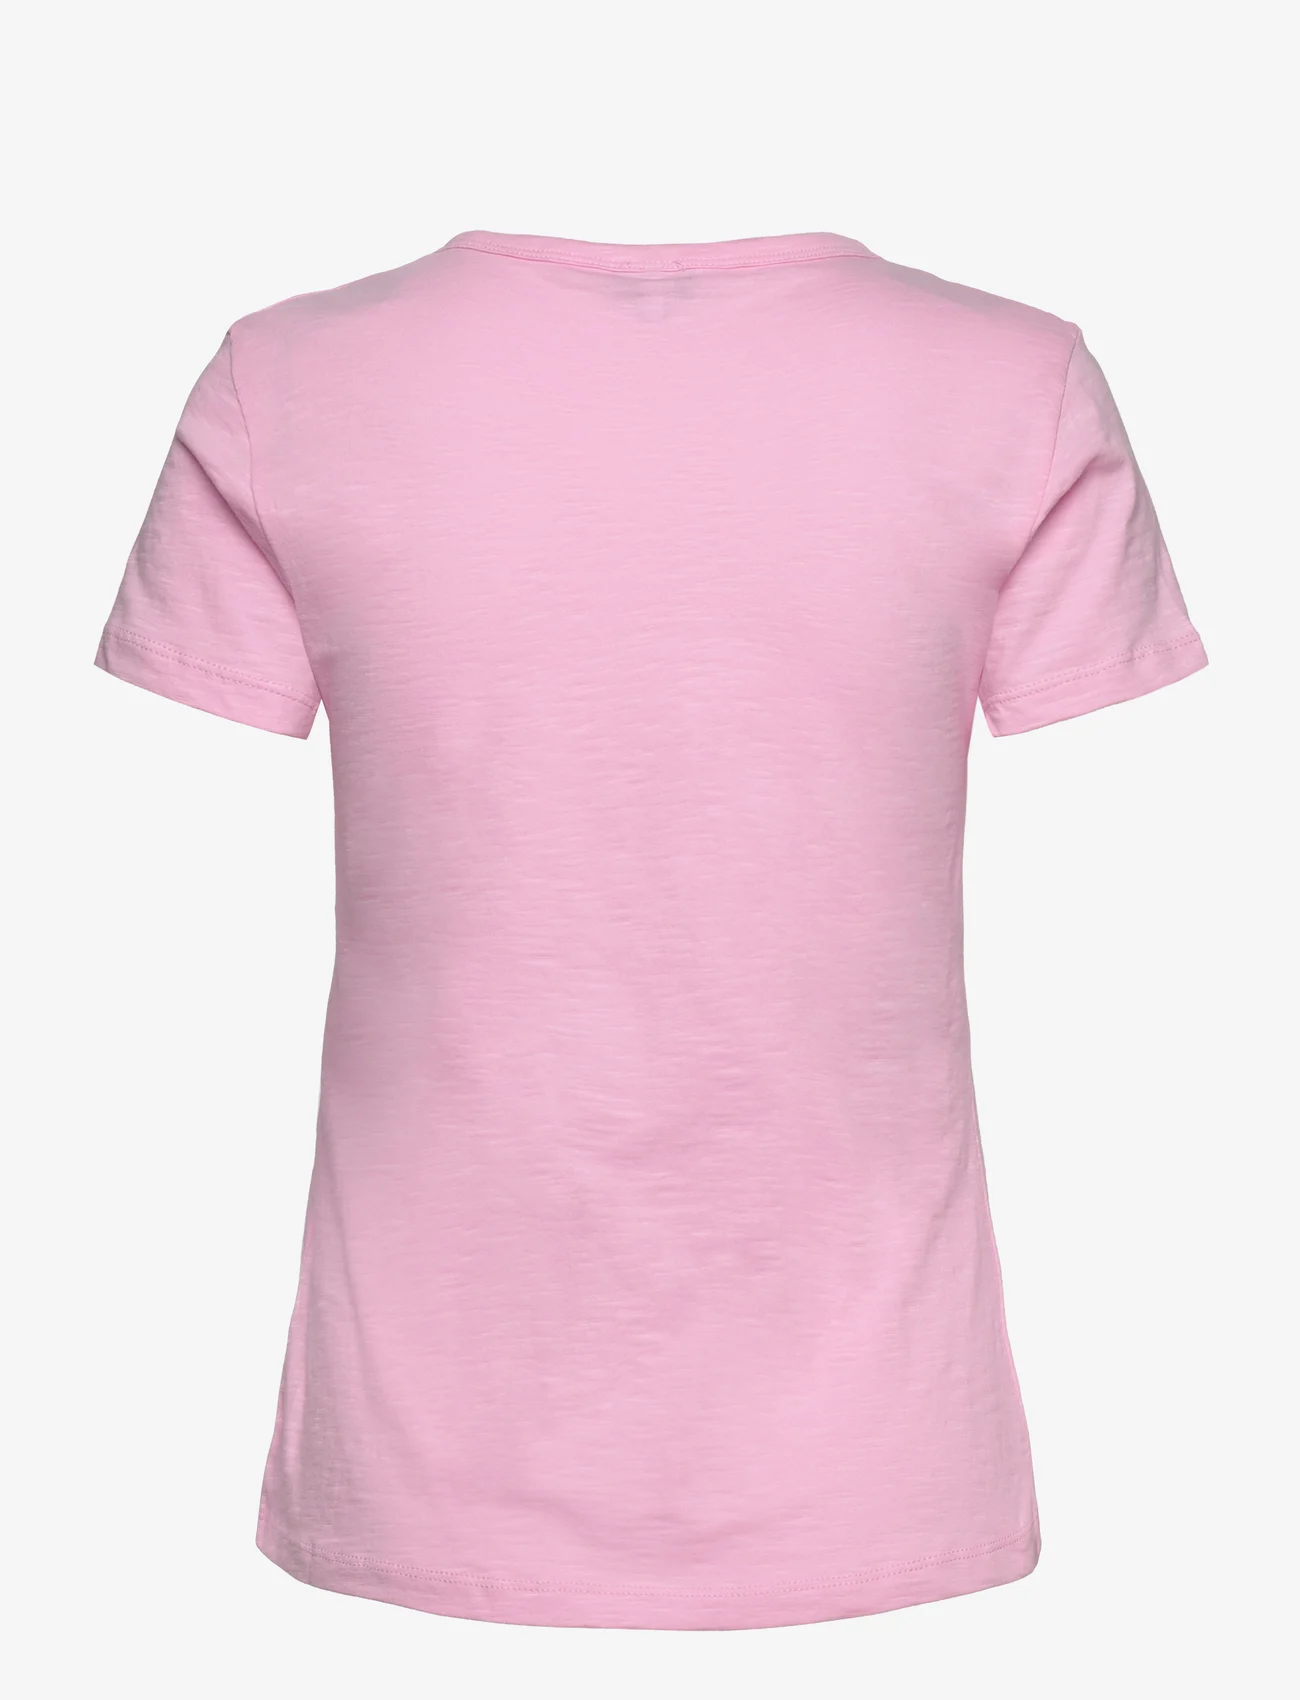 Tommy Hilfiger - 1985 SLIM SLUB C-NK SS - t-shirts - iconic pink - 1